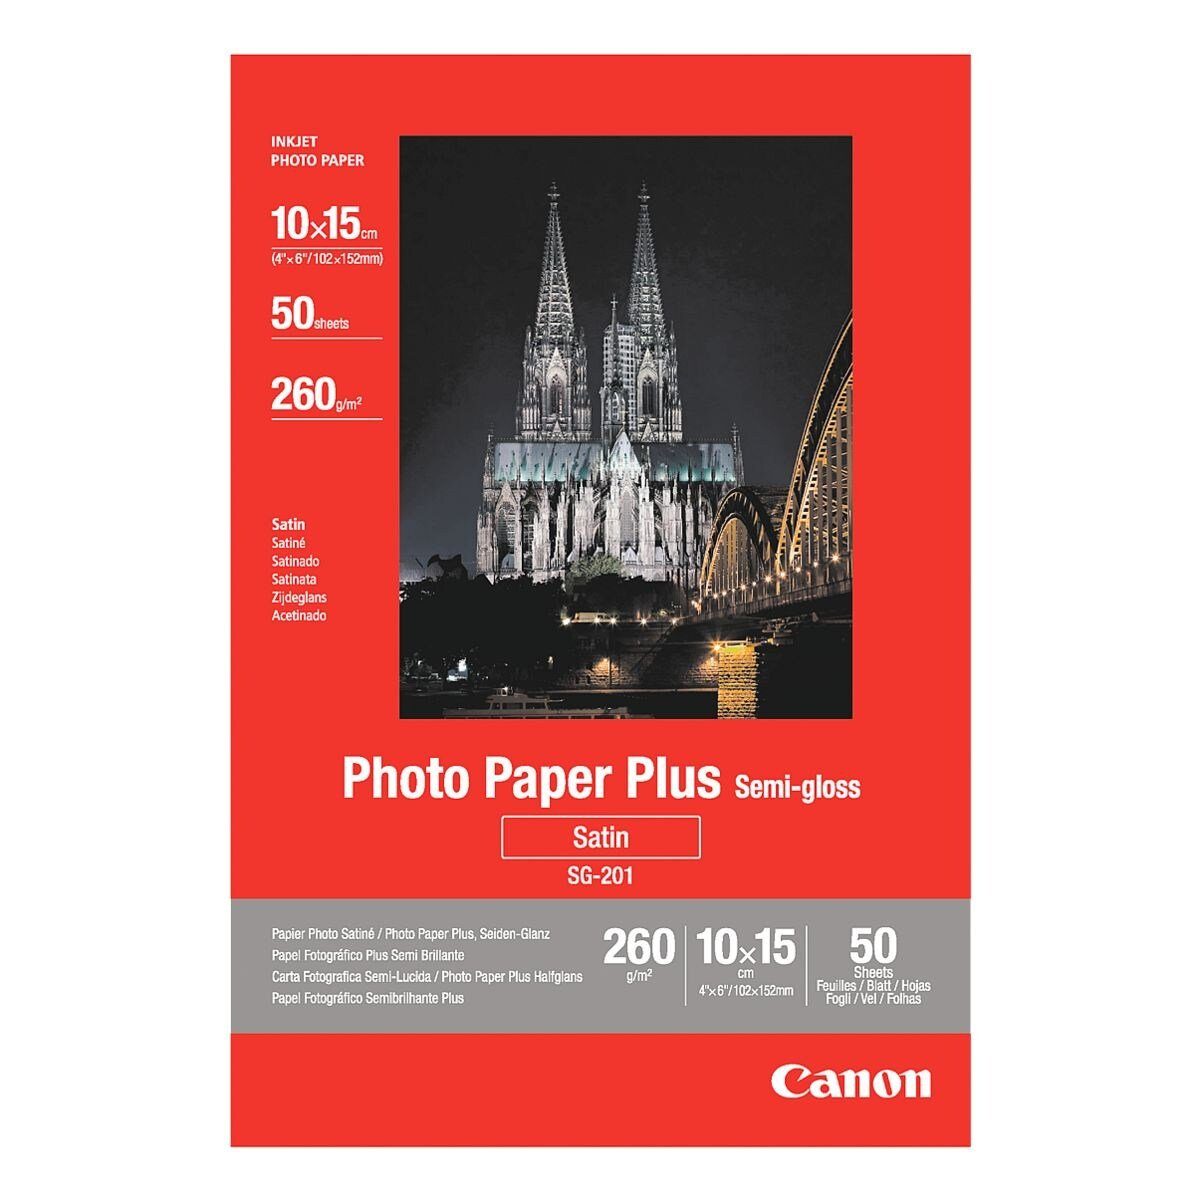 10x15 50 Fotopapier Blatt 260 cm, Plus Semi-Gloss, Format seidenmatt, Canon g/m²,